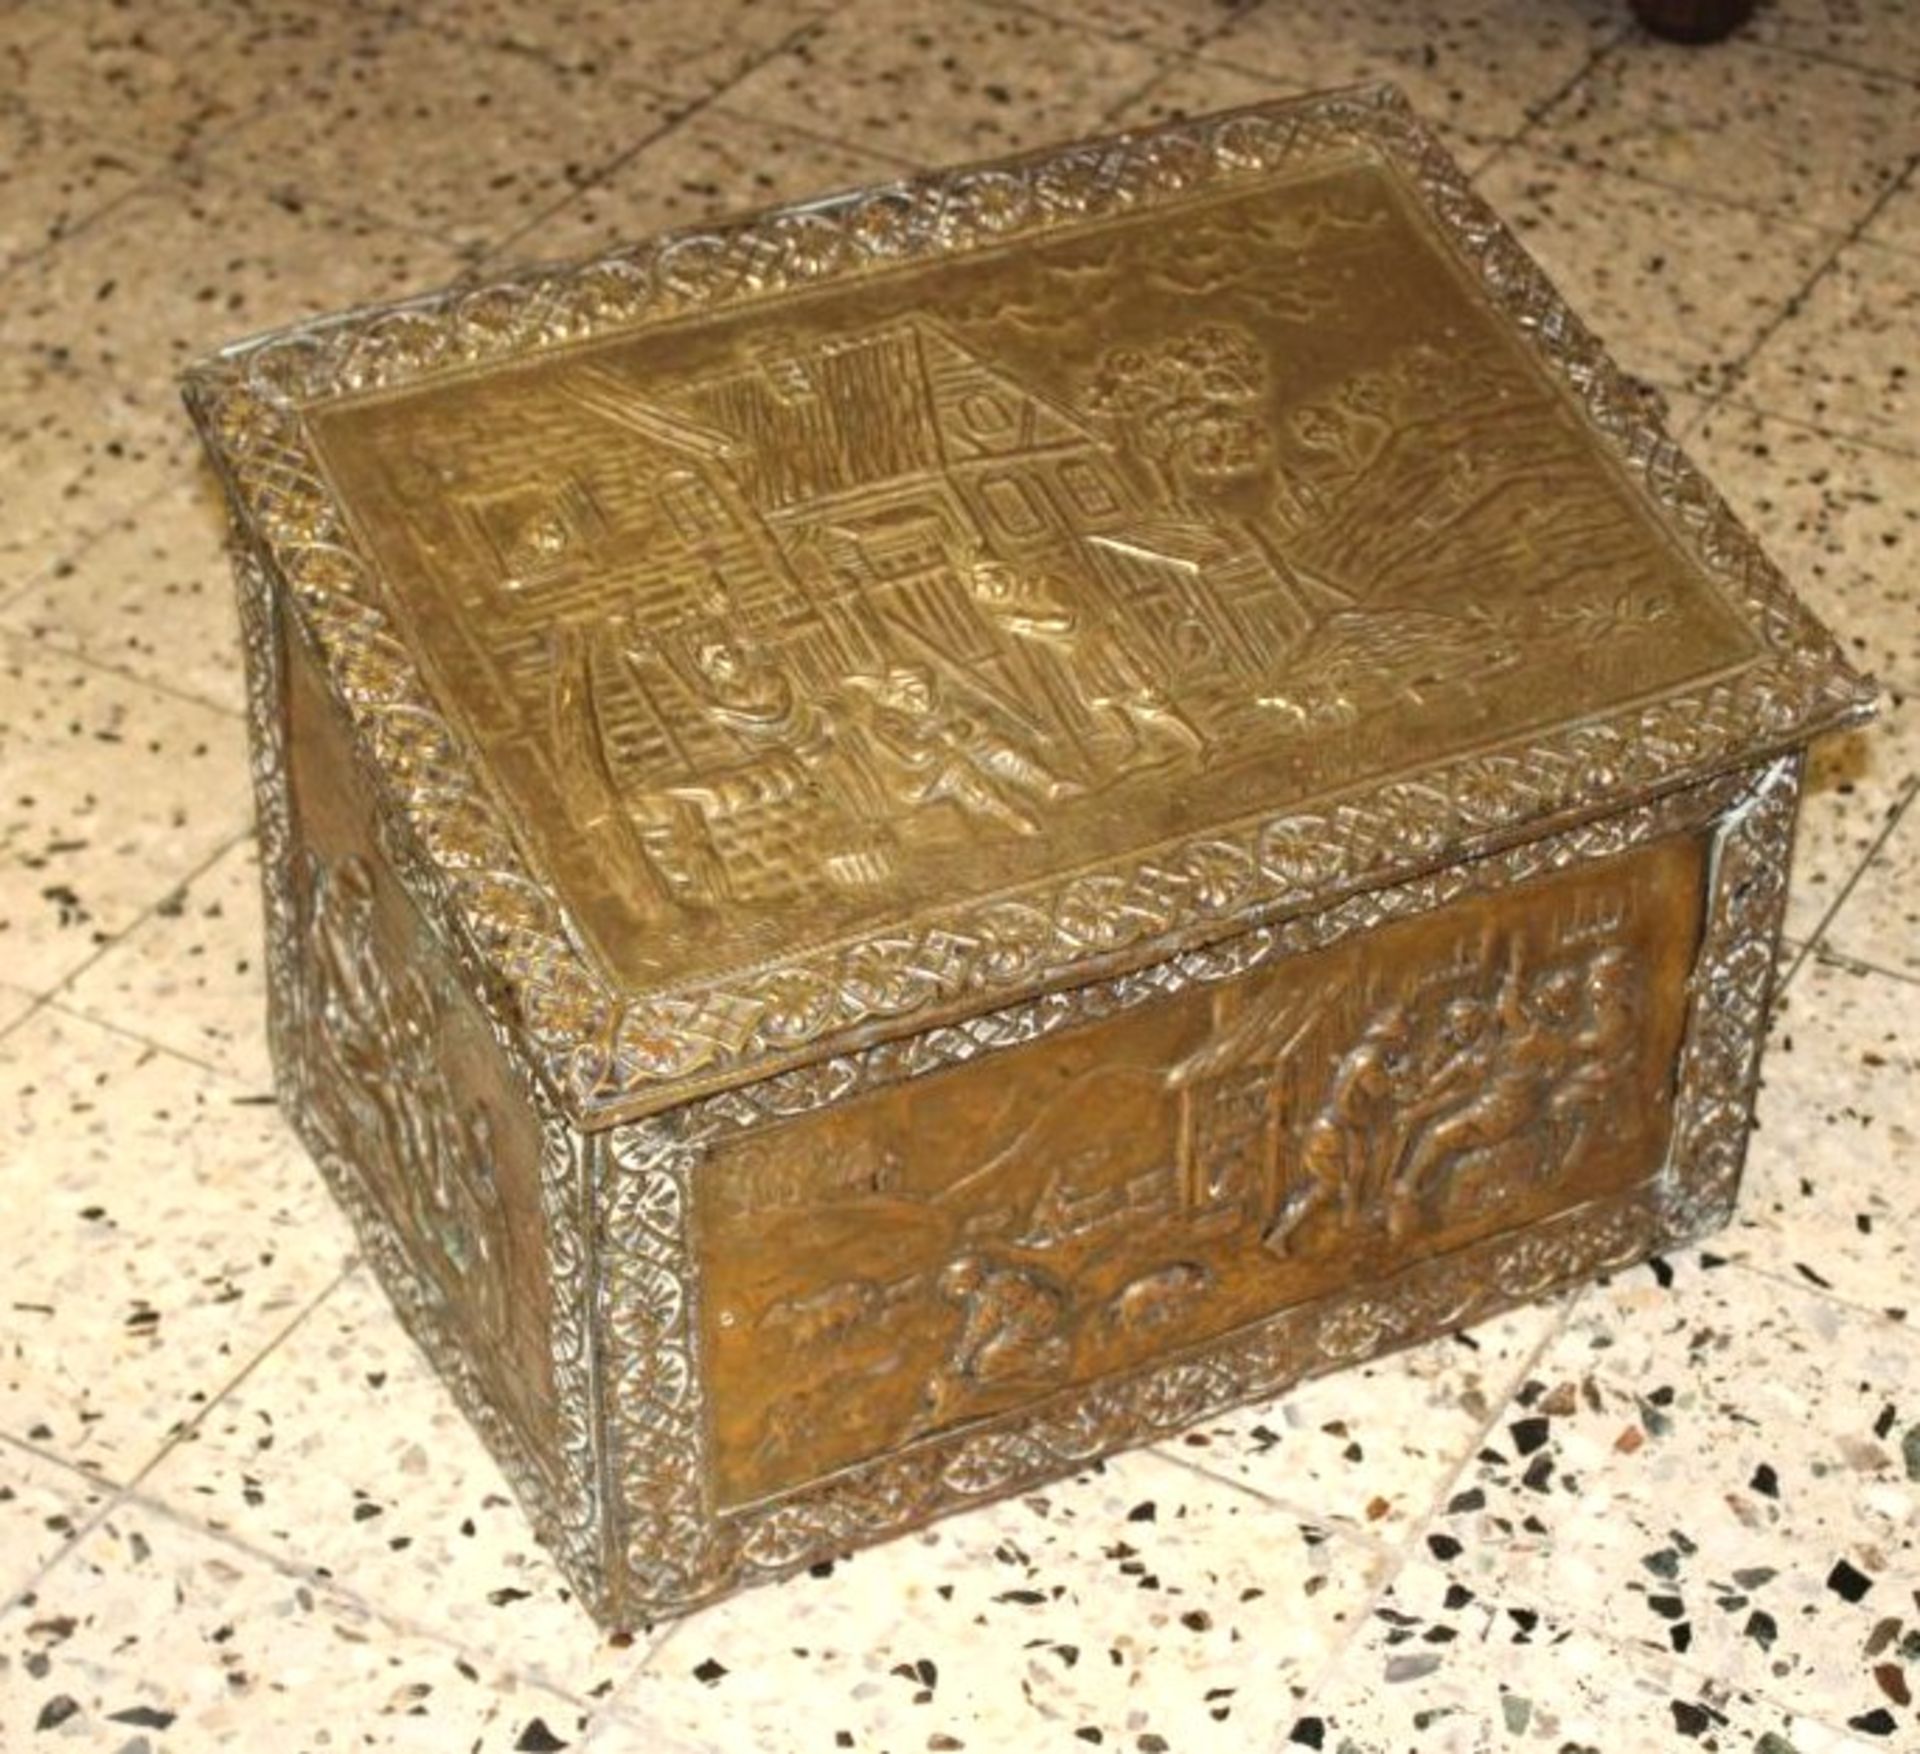 Kasten für Anfachholz / coal box, Messing über Holz, 1. H. 20. Jhd., England, H-35cm B-49cm T-34cm